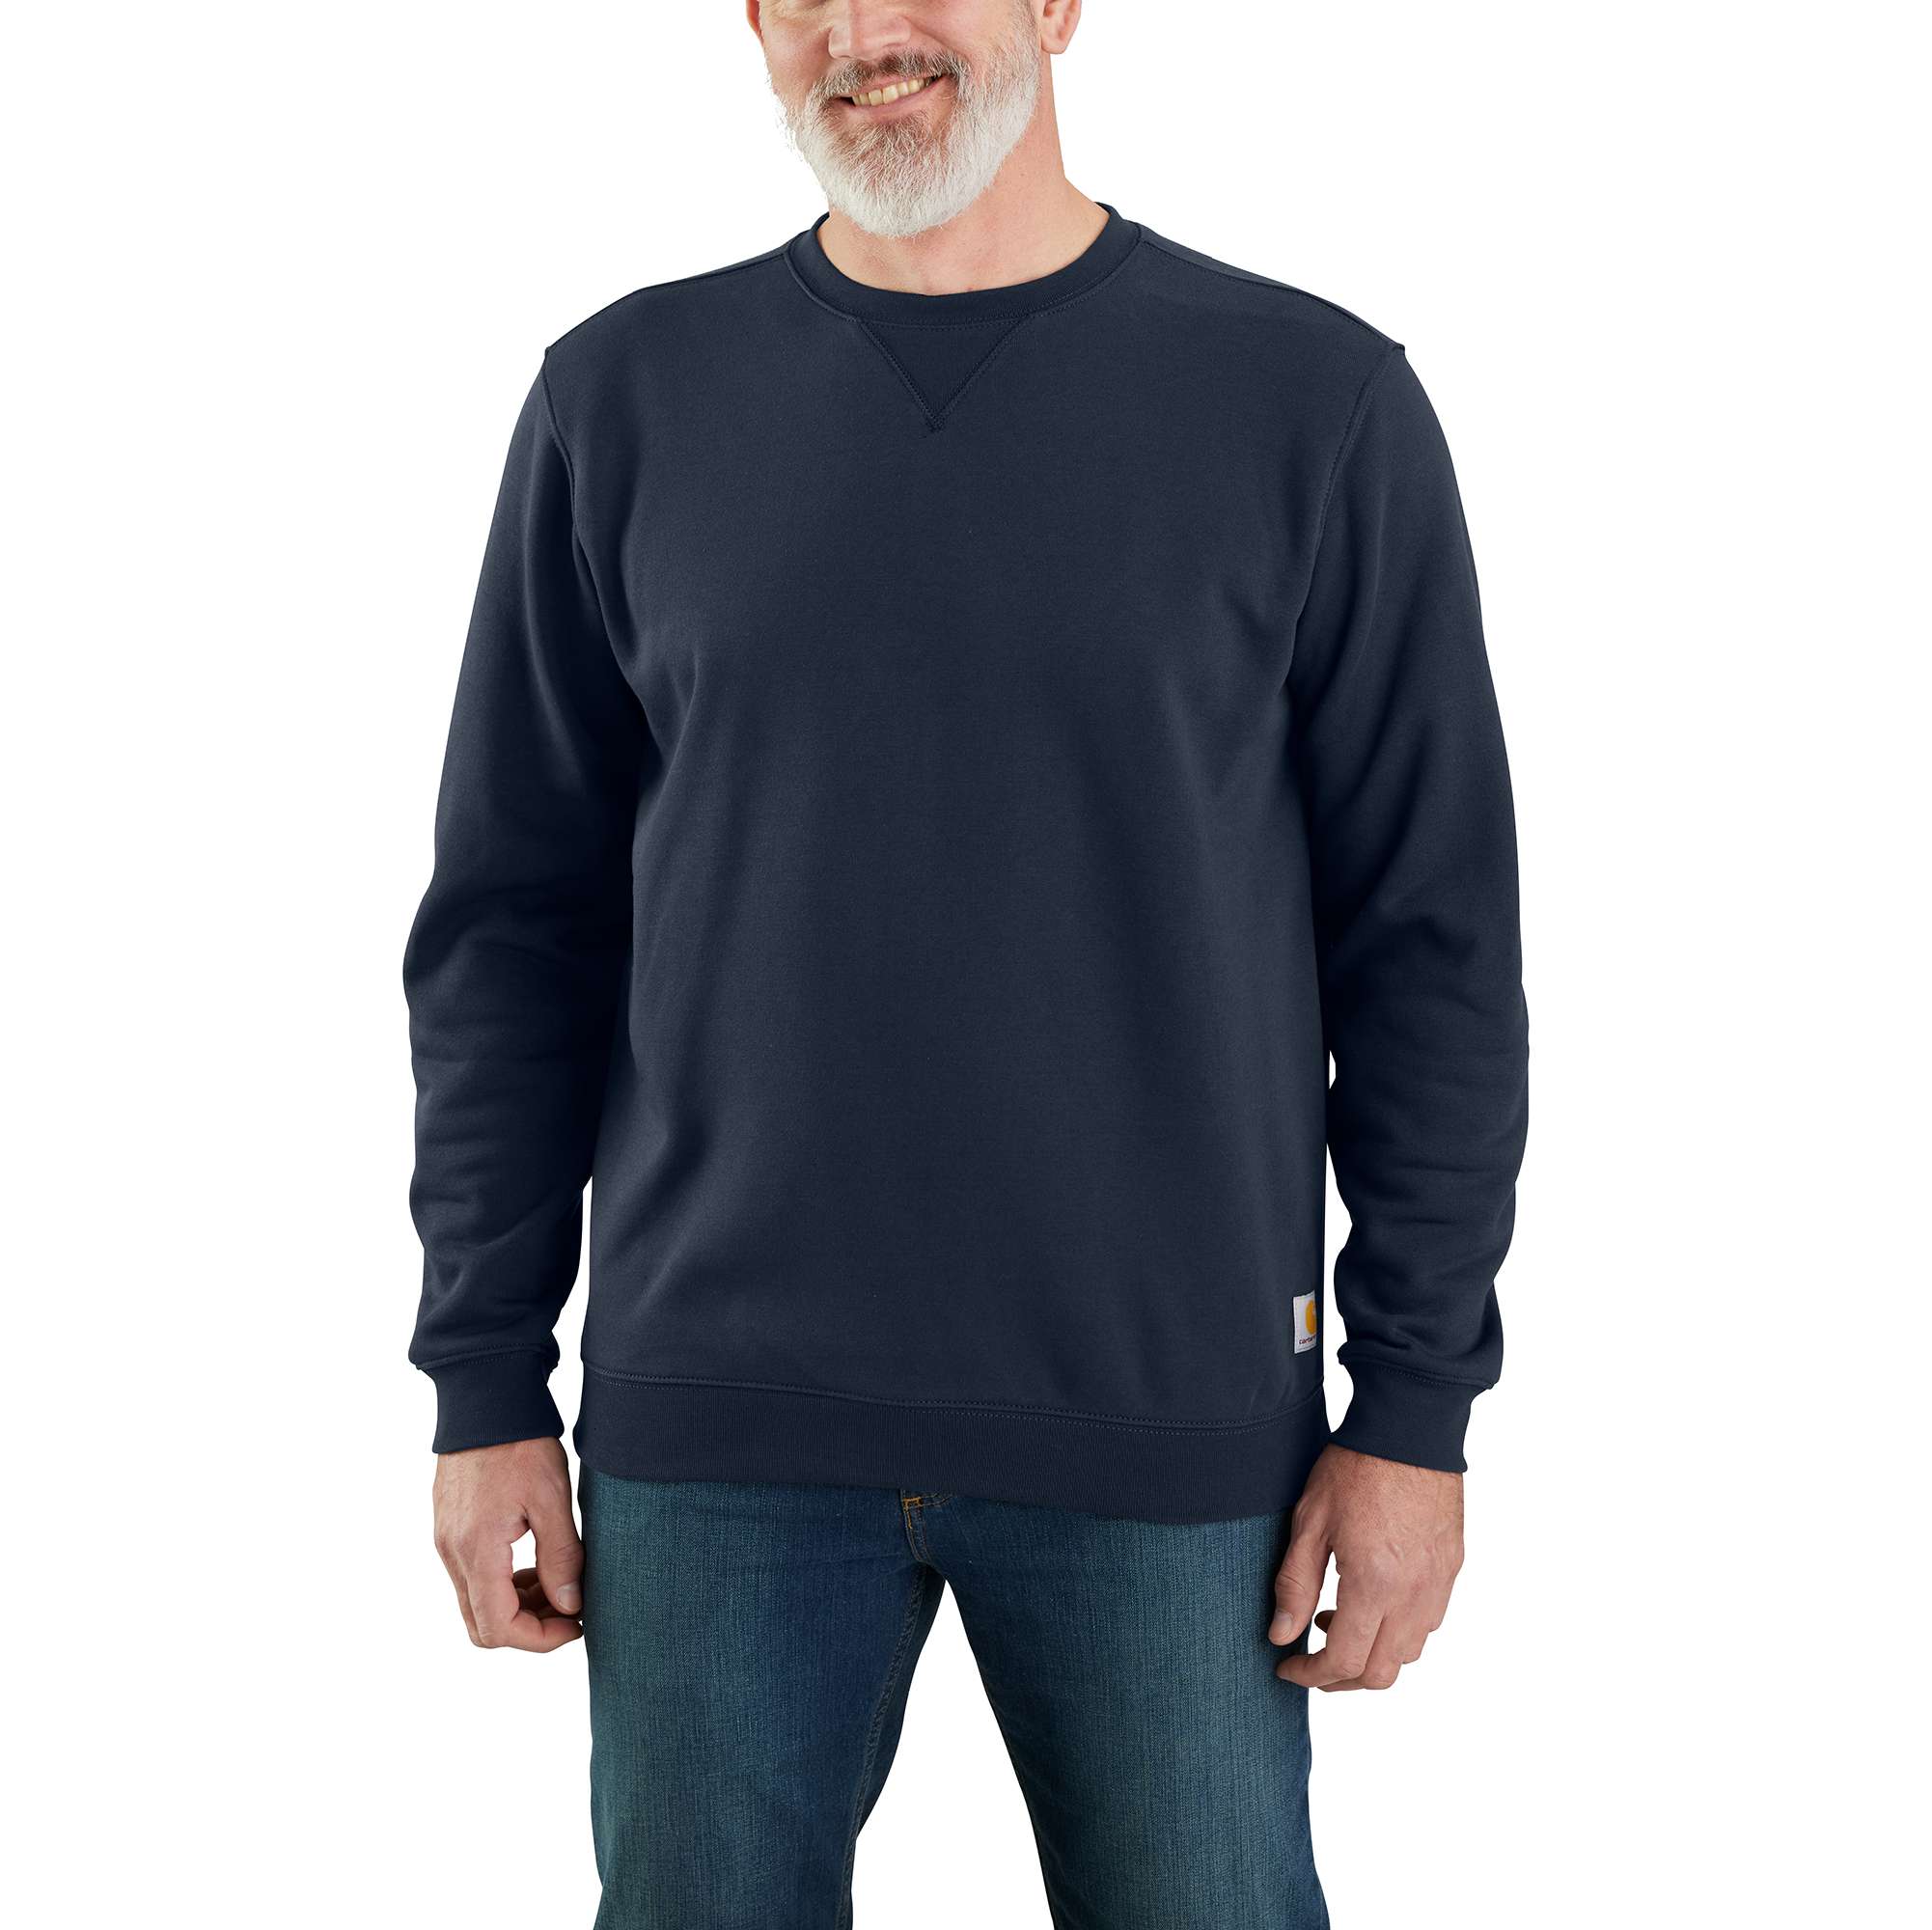 Carhartt Men's Tall X Large Black Cotton/Polyester Sweats K122-BLK - The  Home Depot